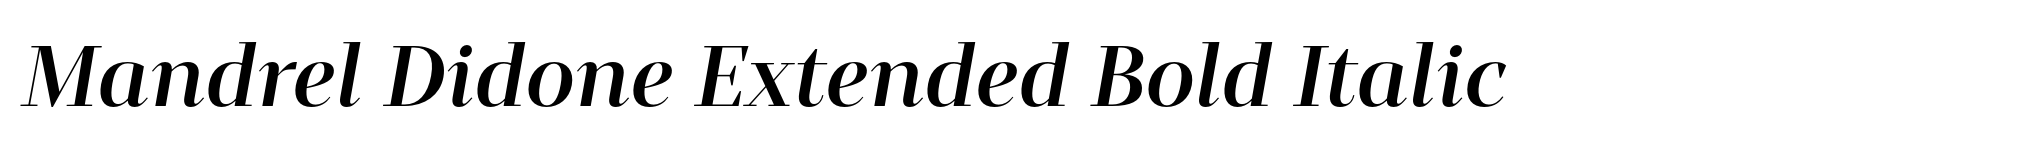 Mandrel Didone Extended Bold Italic image